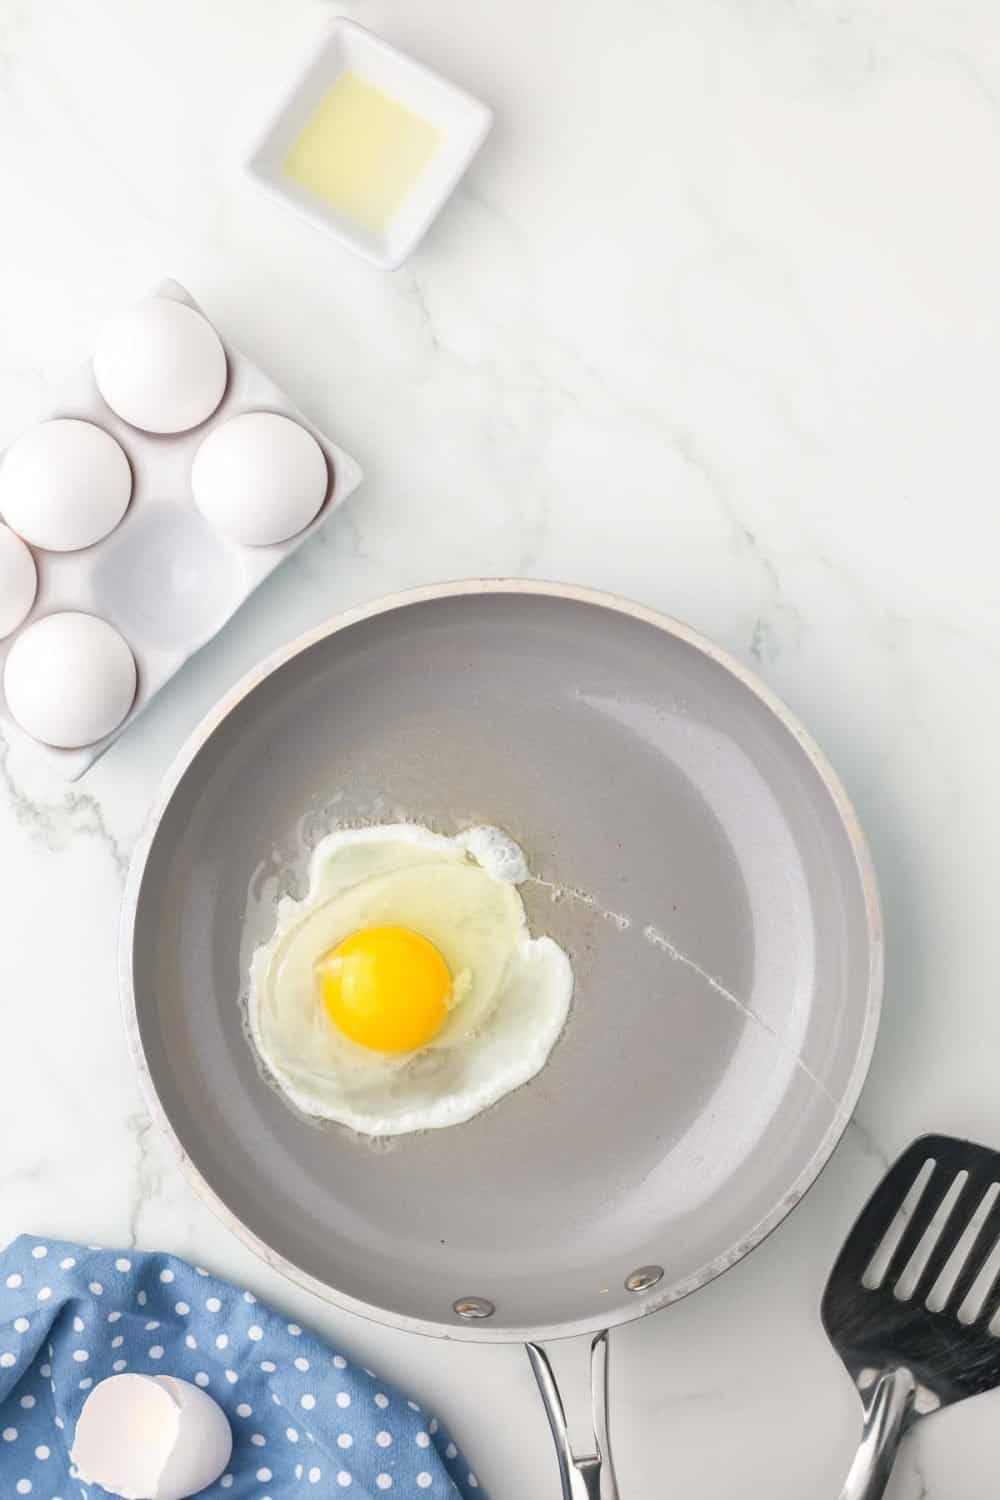 sautéed pan with an egg cooking